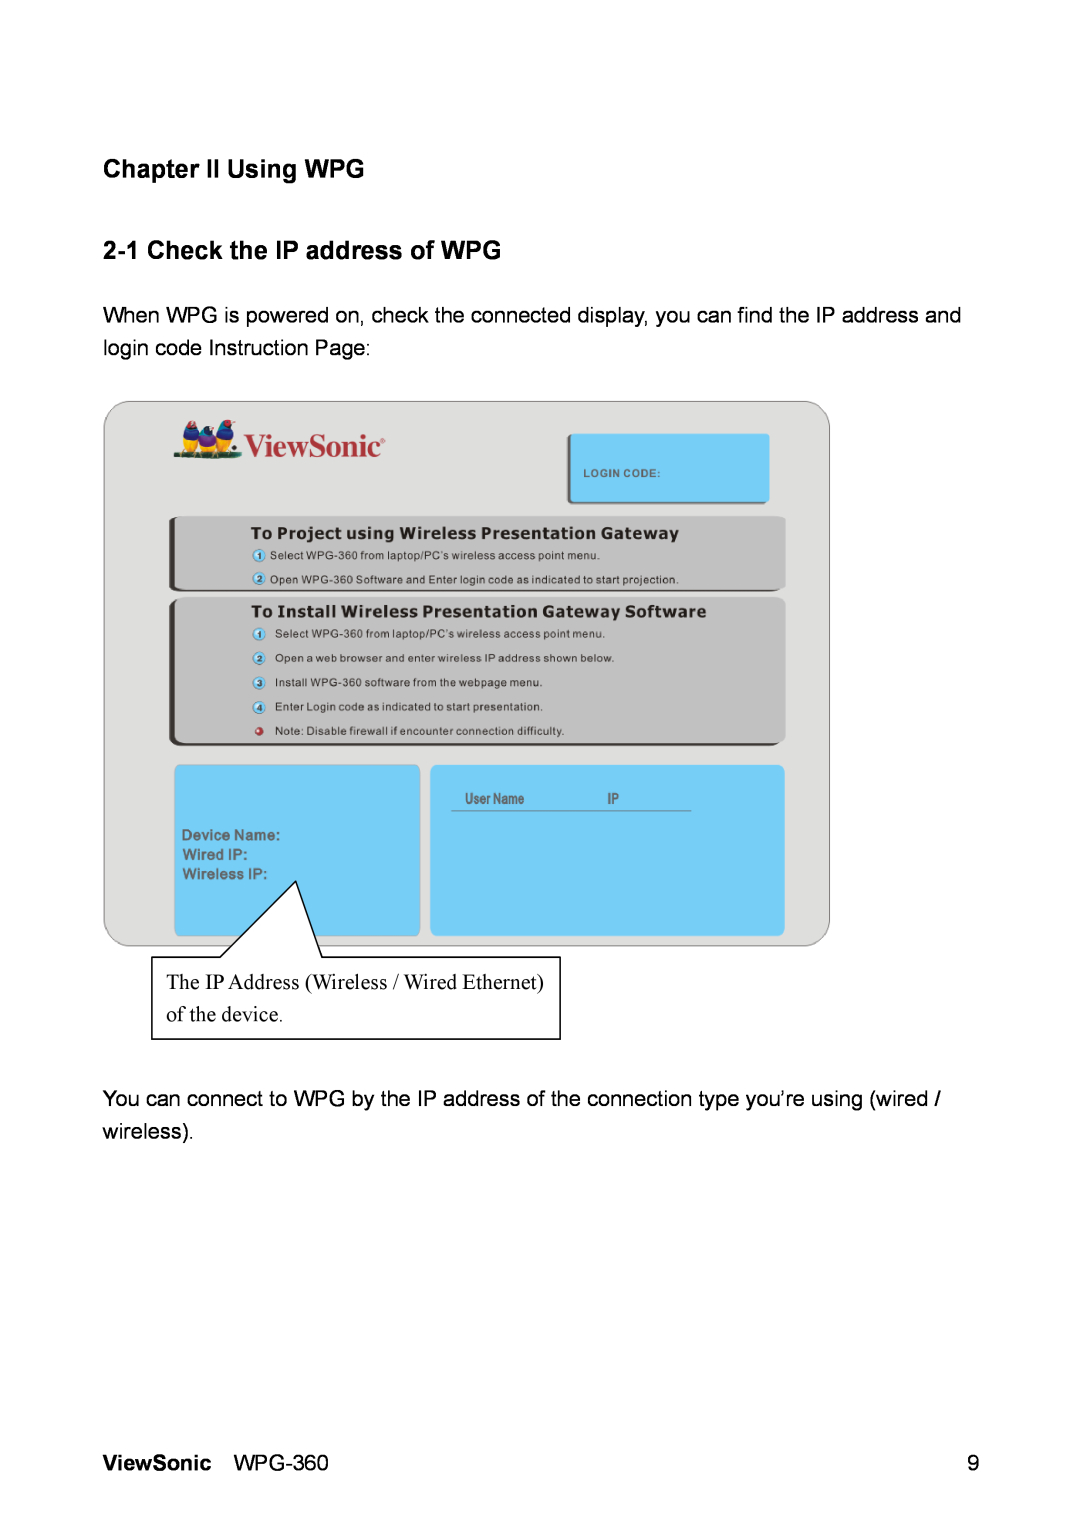 ViewSonic manual Chapter II Using WPG 2-1 Check the IP address of WPG, ViewSonic WPG-360 